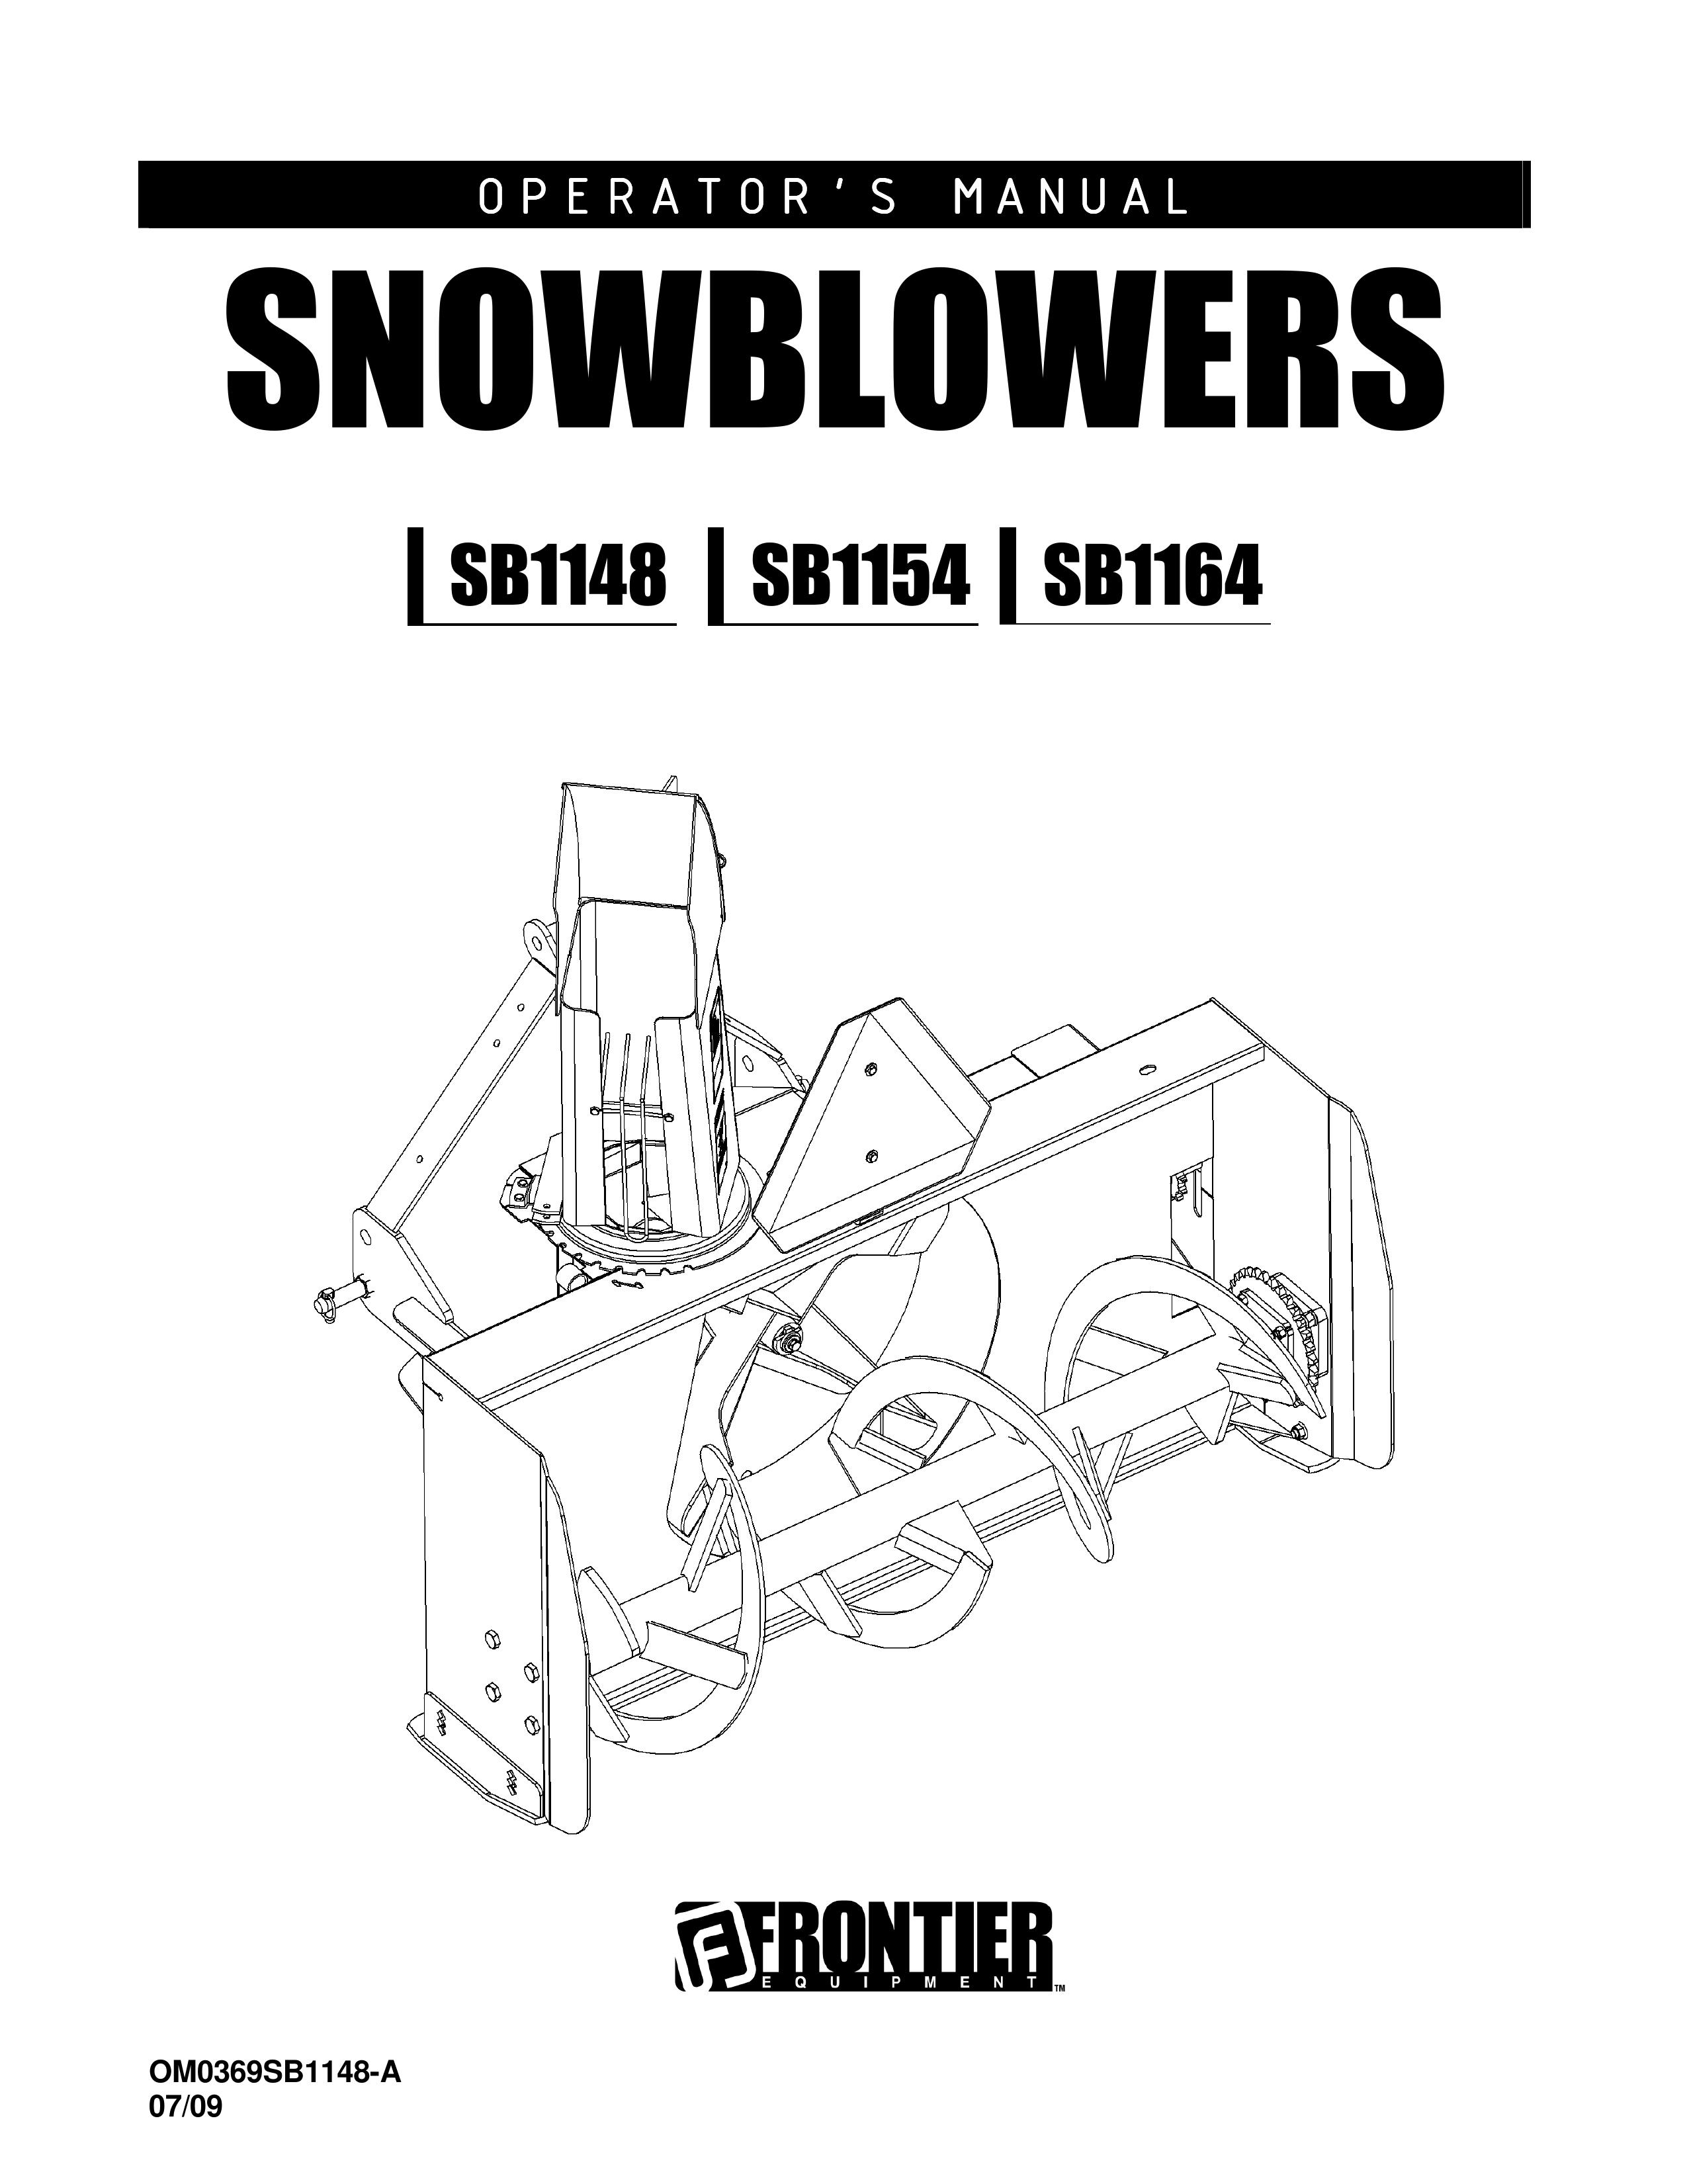 John Deere SB1154 Snow Blower User Manual